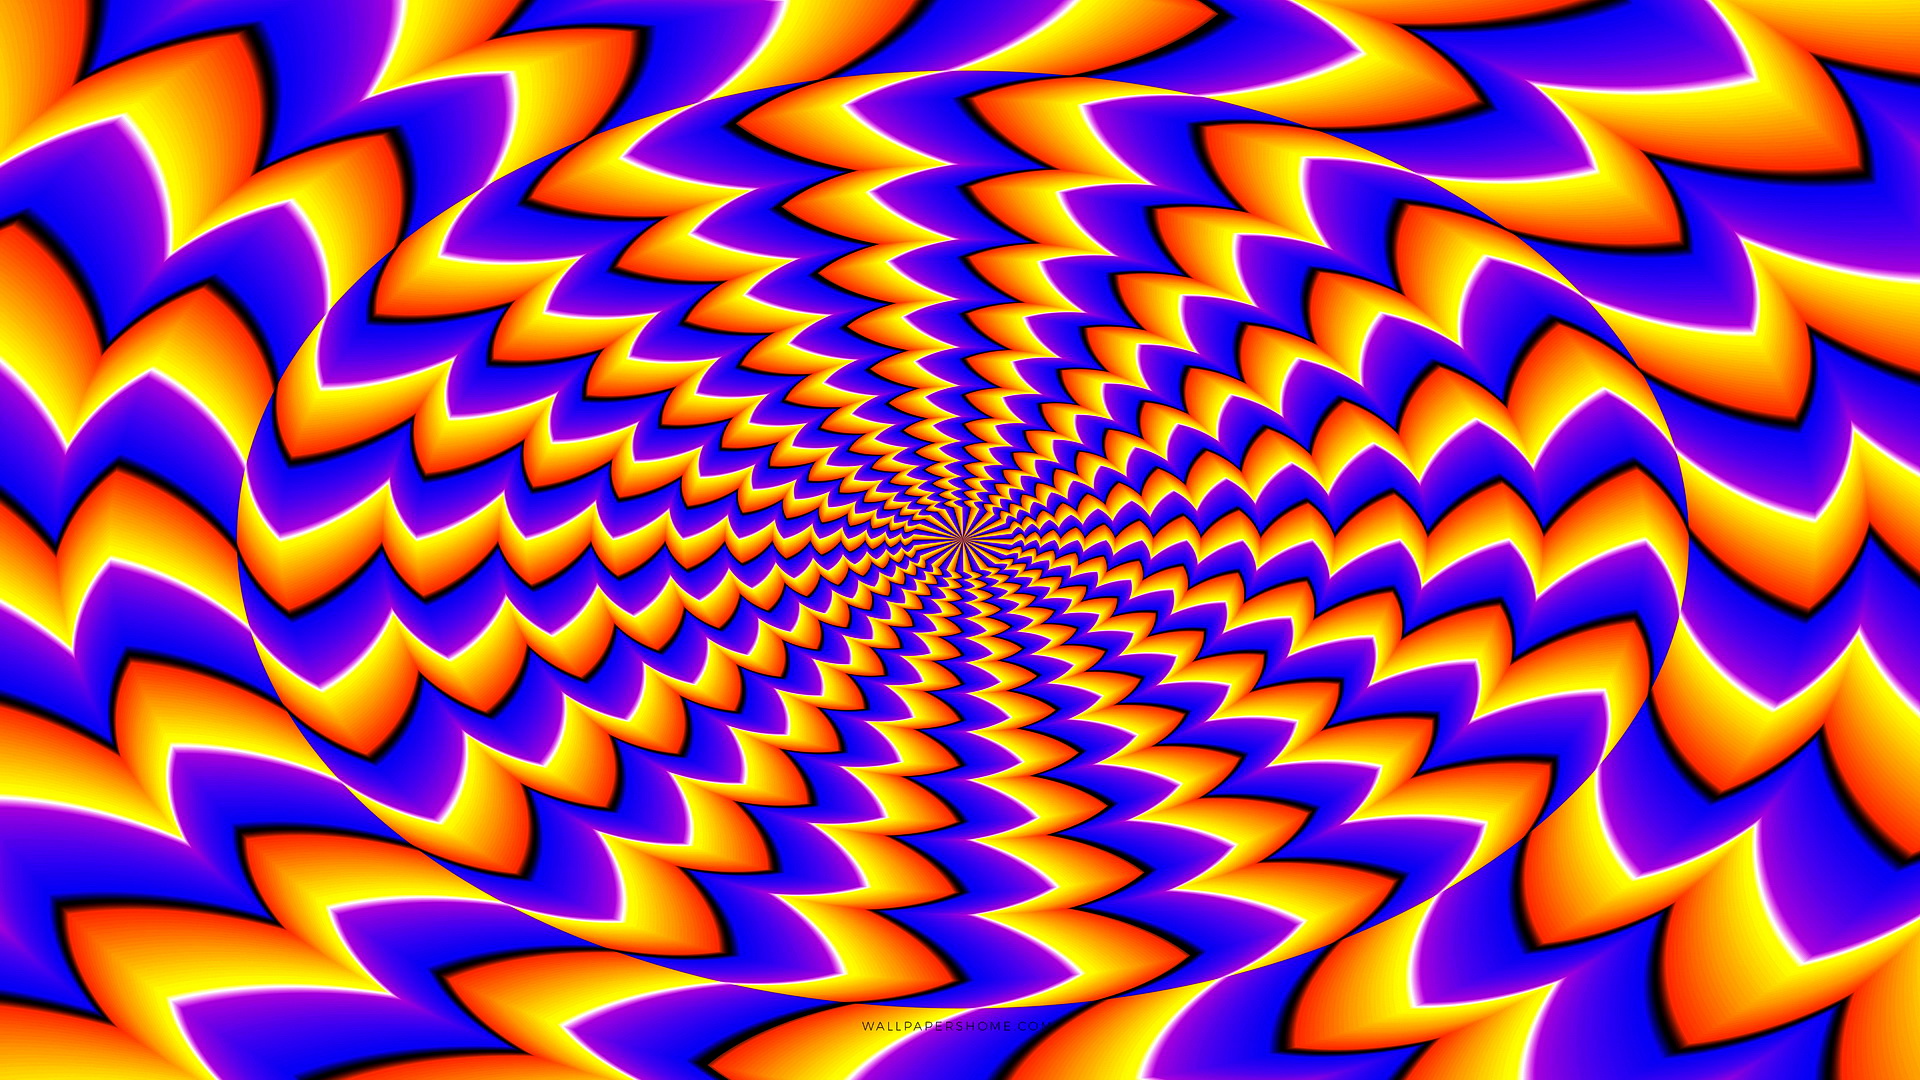 The illusion of rotation